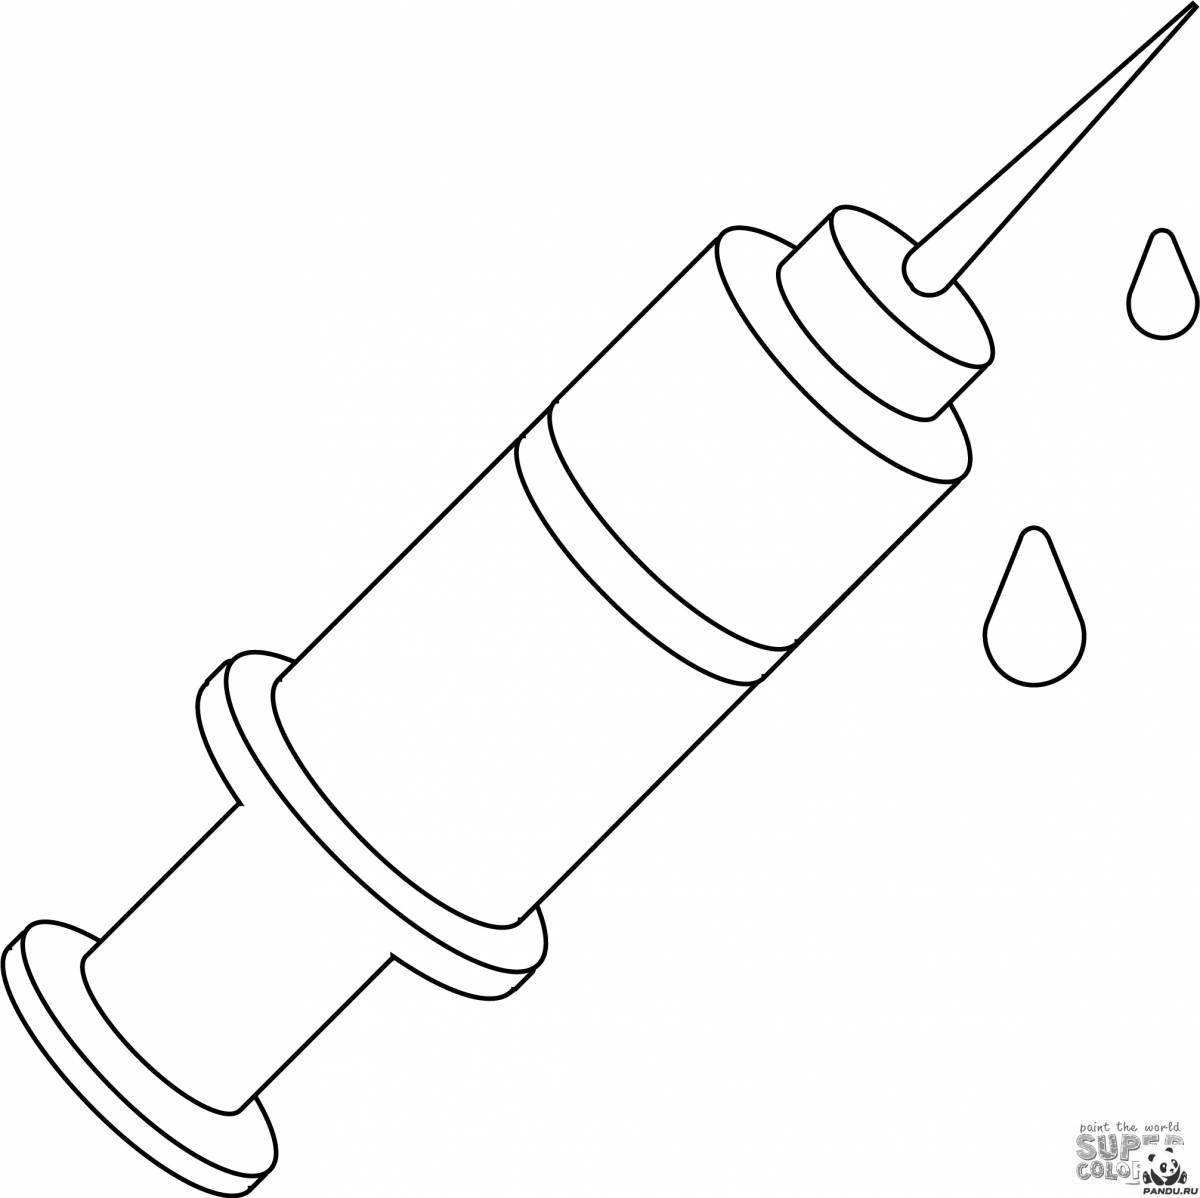 Joy syringe coloring page